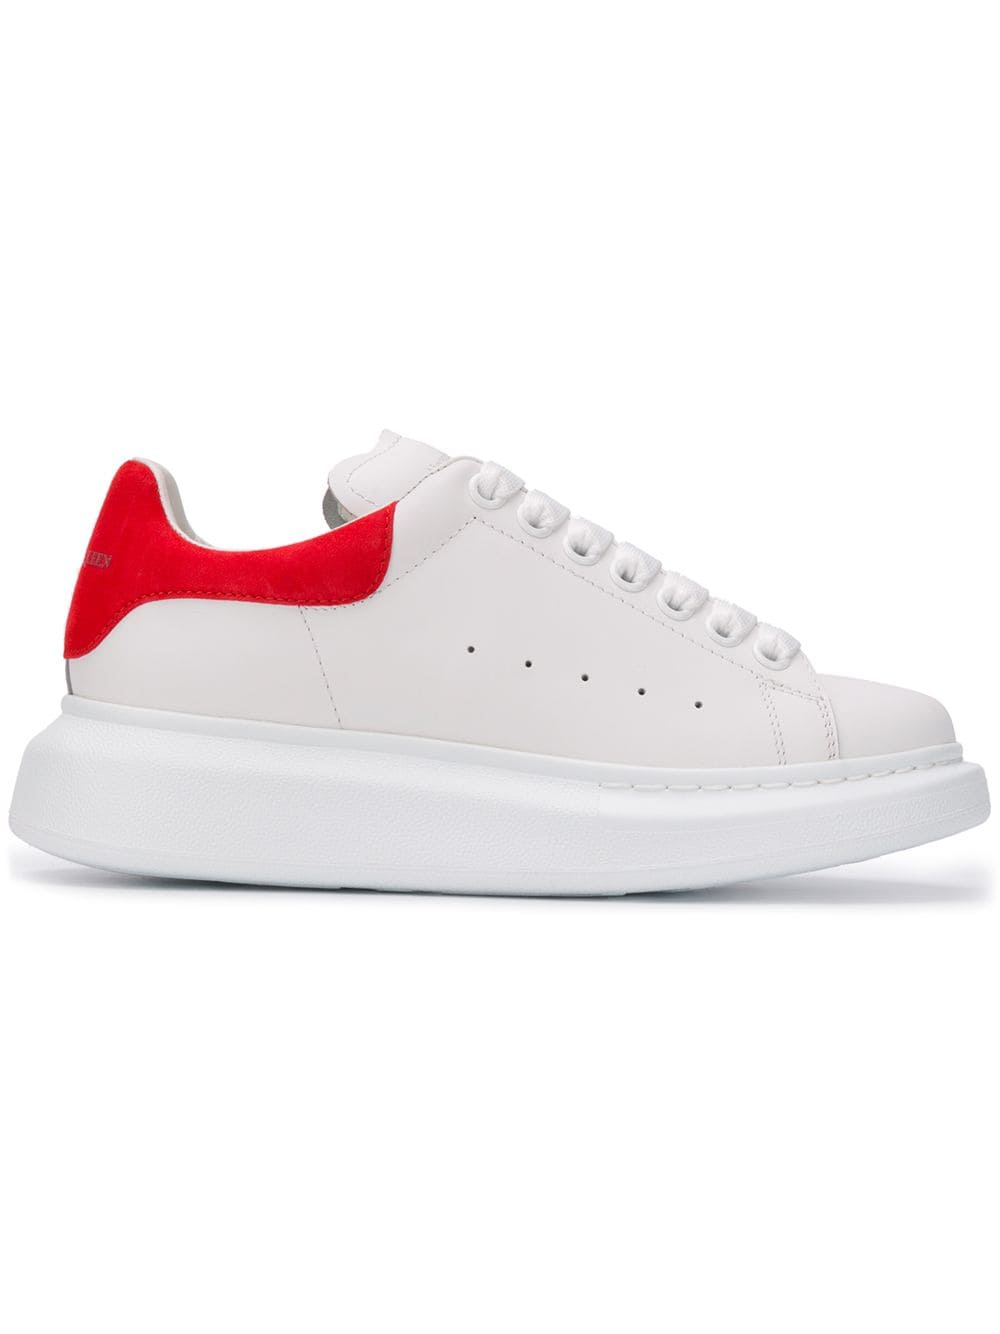 Alexander Mcqueen Sneaker Pelle In White Lust Red